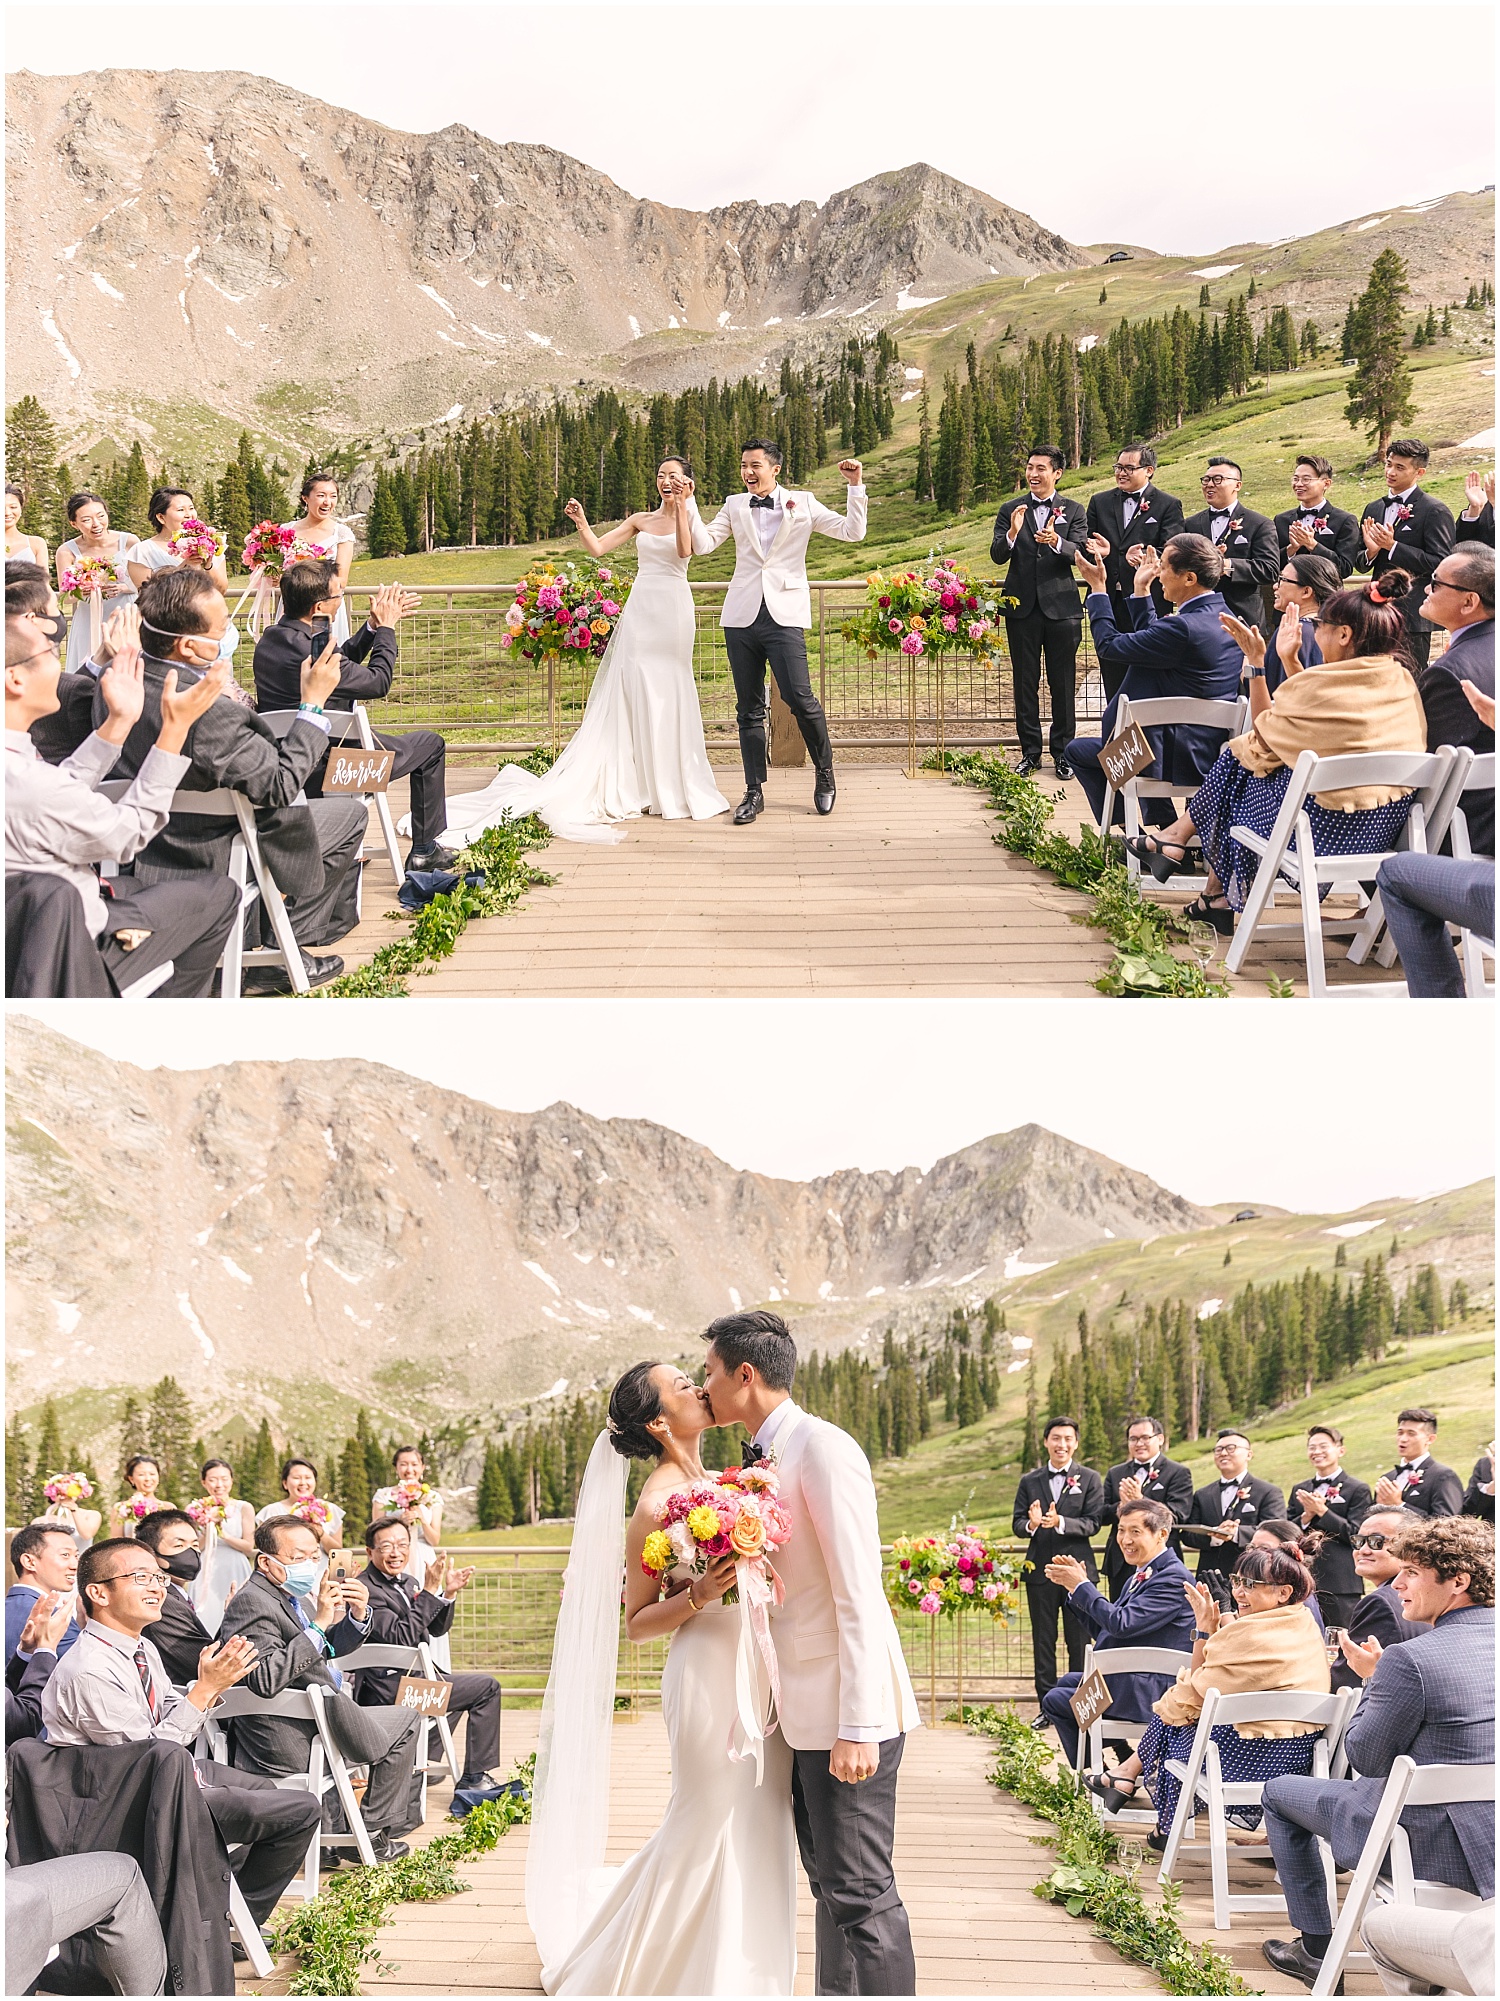 Bride and groom celebrate wedding ceremony at Black Mountain Lodge Arapahoe Basin